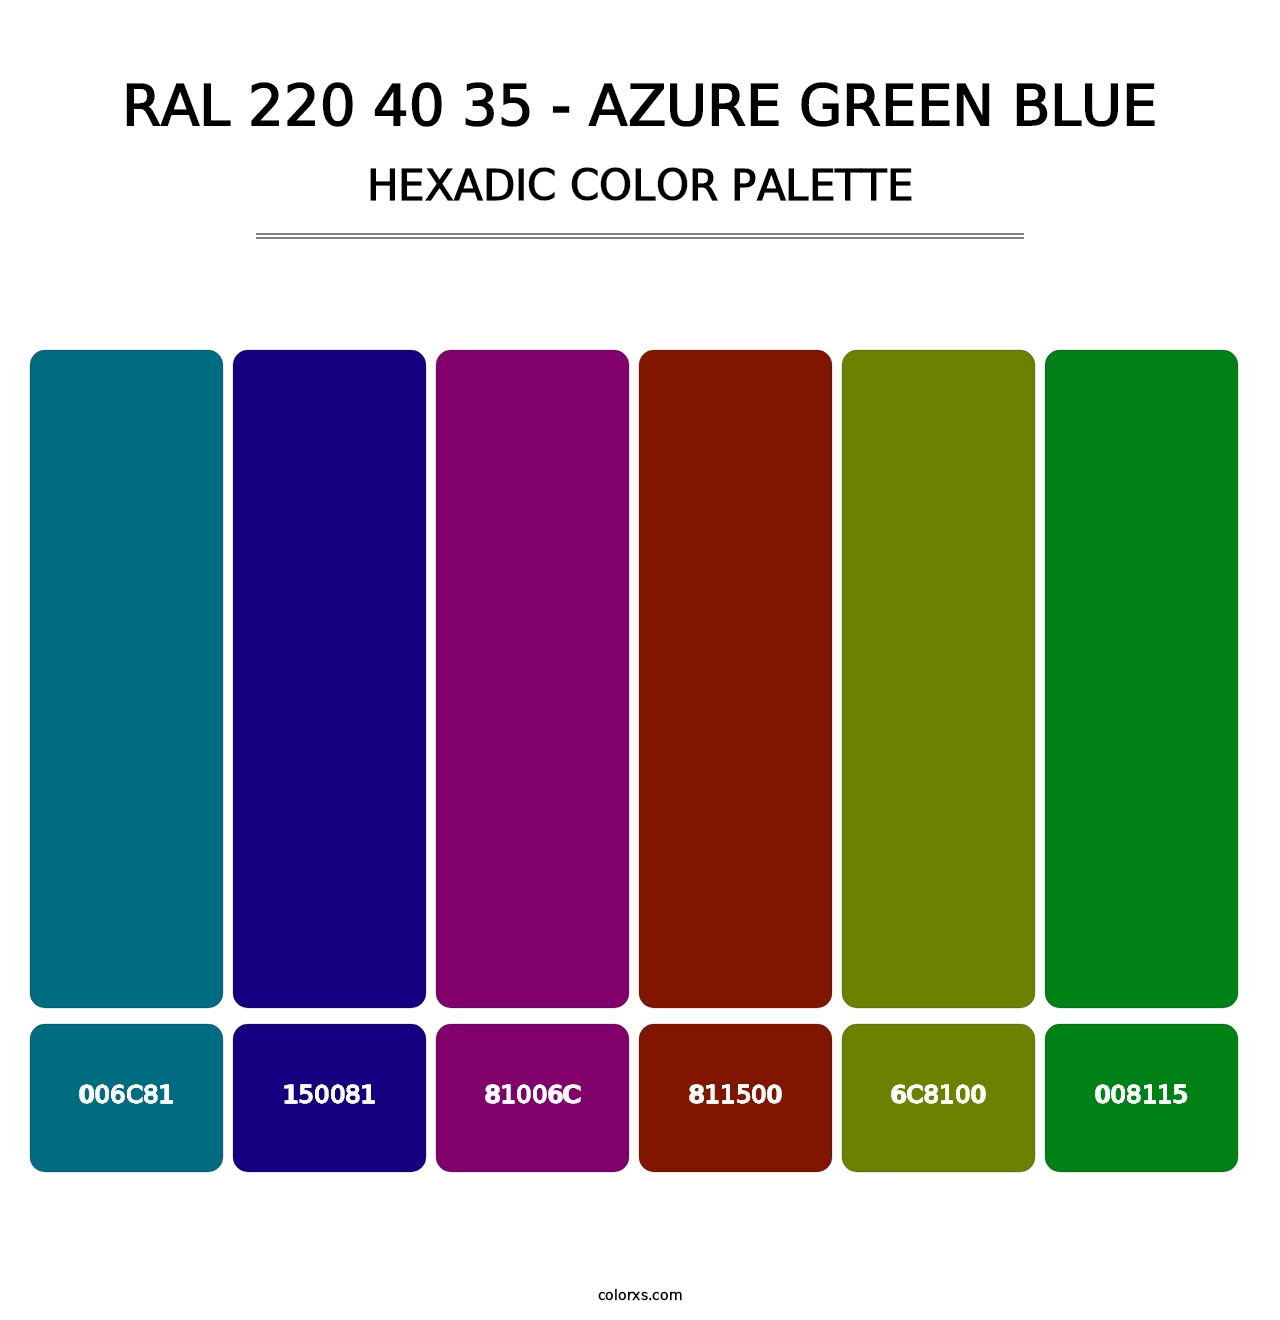 RAL 220 40 35 - Azure Green Blue - Hexadic Color Palette